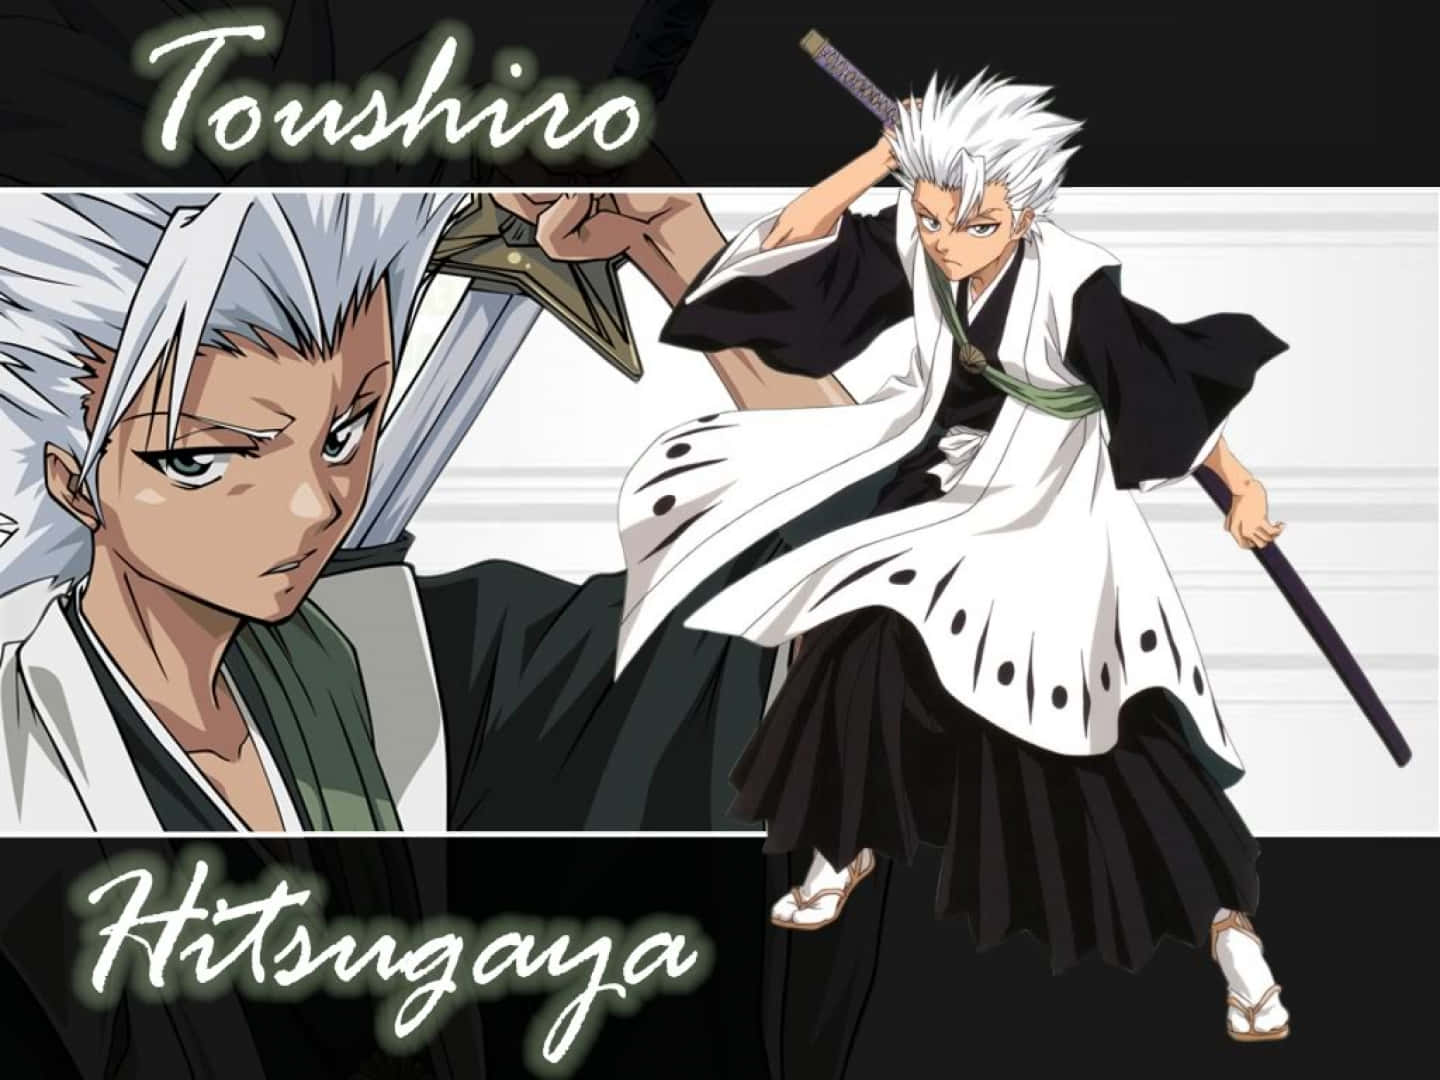 Toshiro Hitsugaya From The Popular Anime Series Bleach.